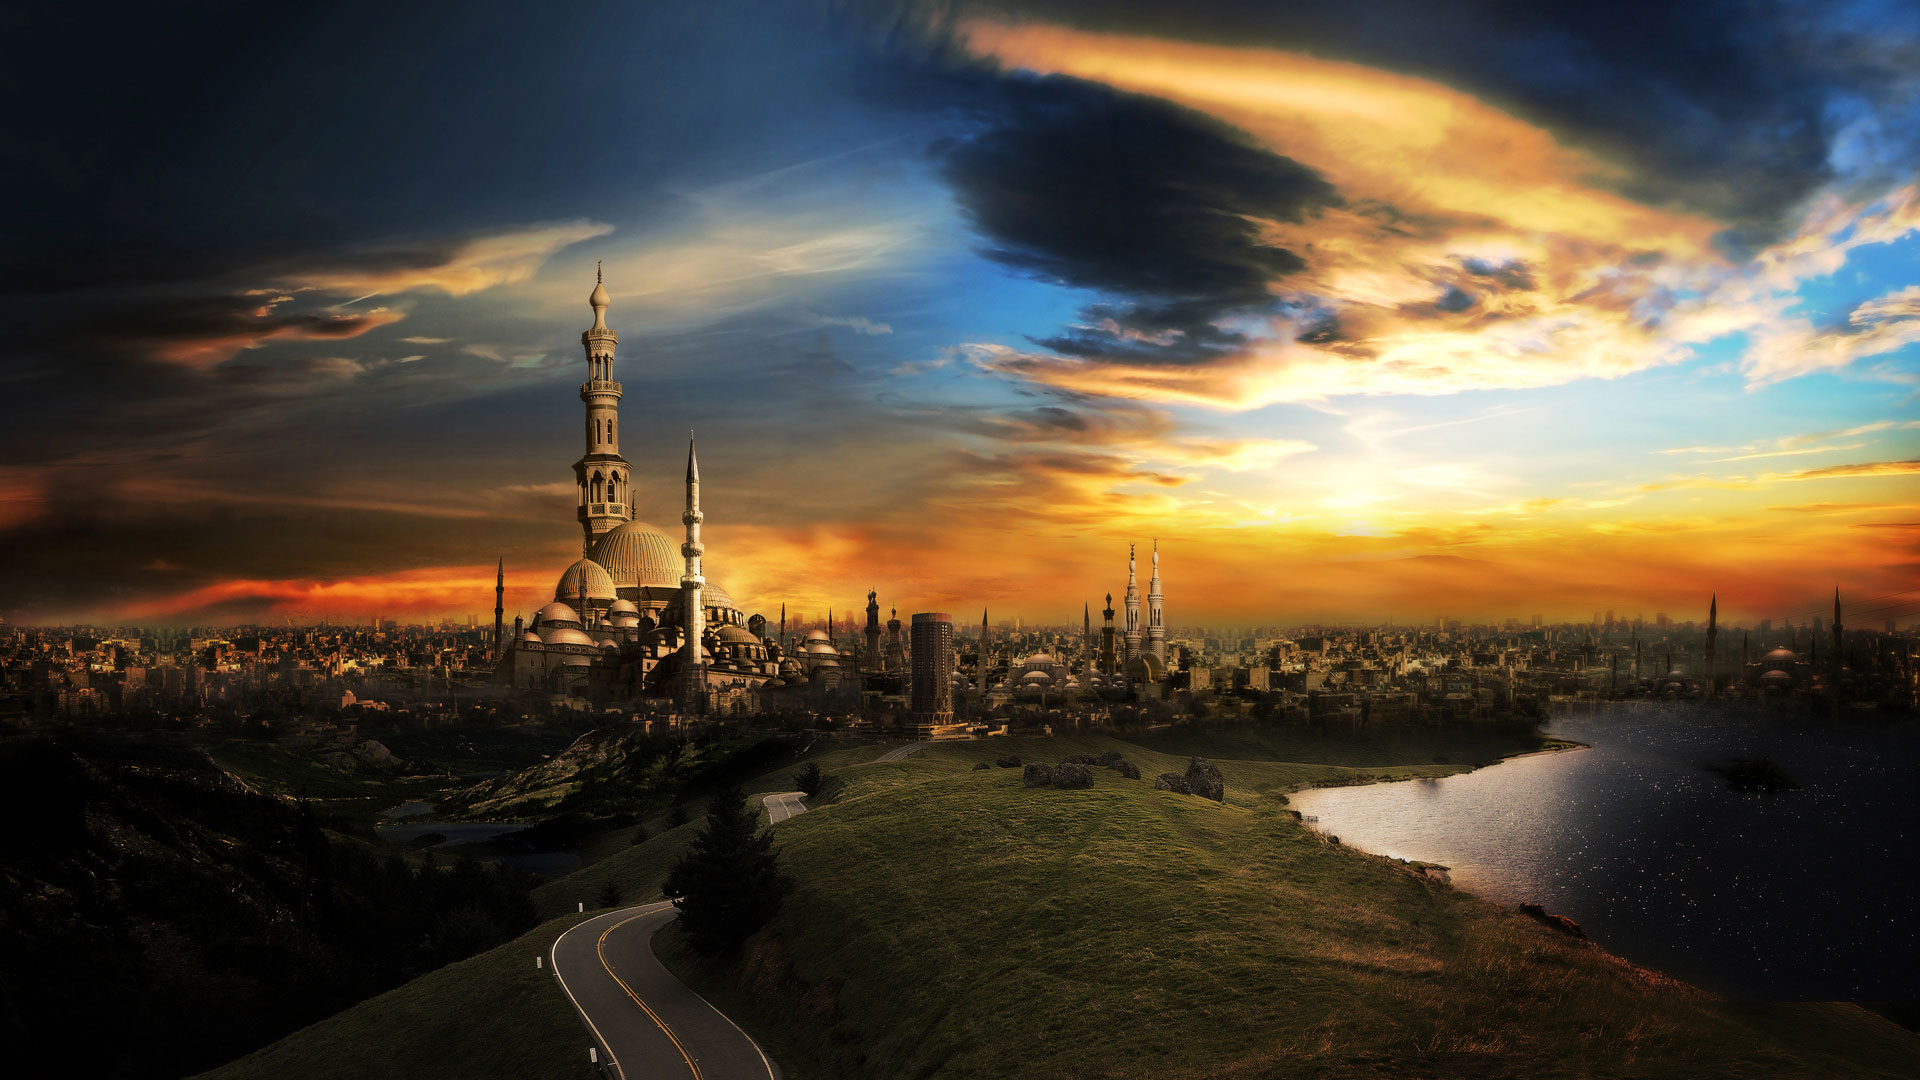 islam, landscape, man made, cgi, sunset, lake, road, city, cairo, sky, cloud